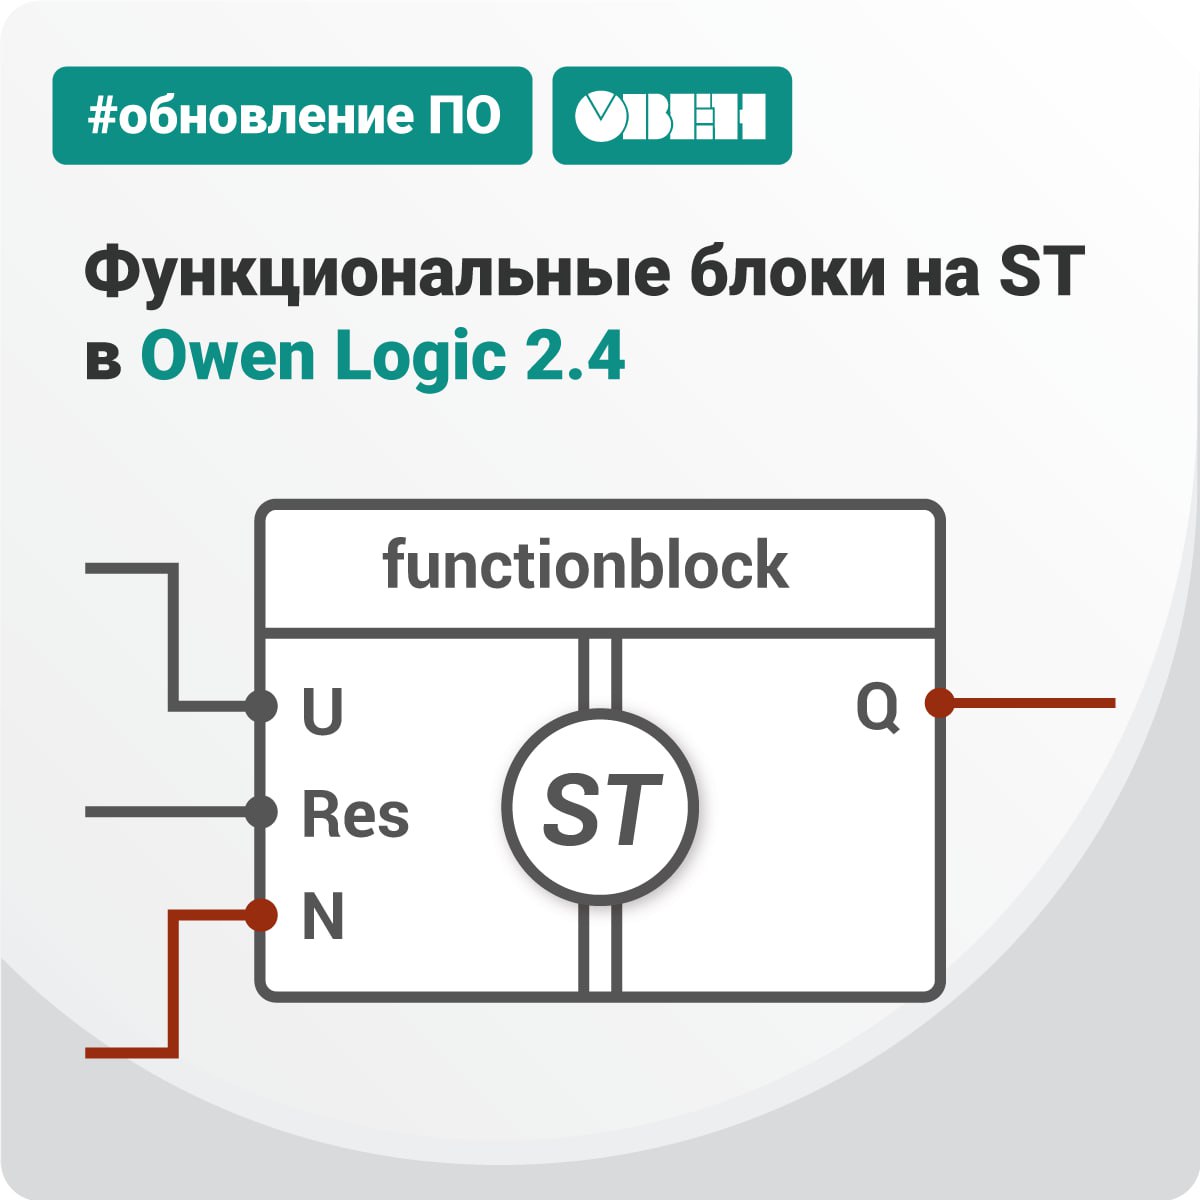 Owen Logic 2.4